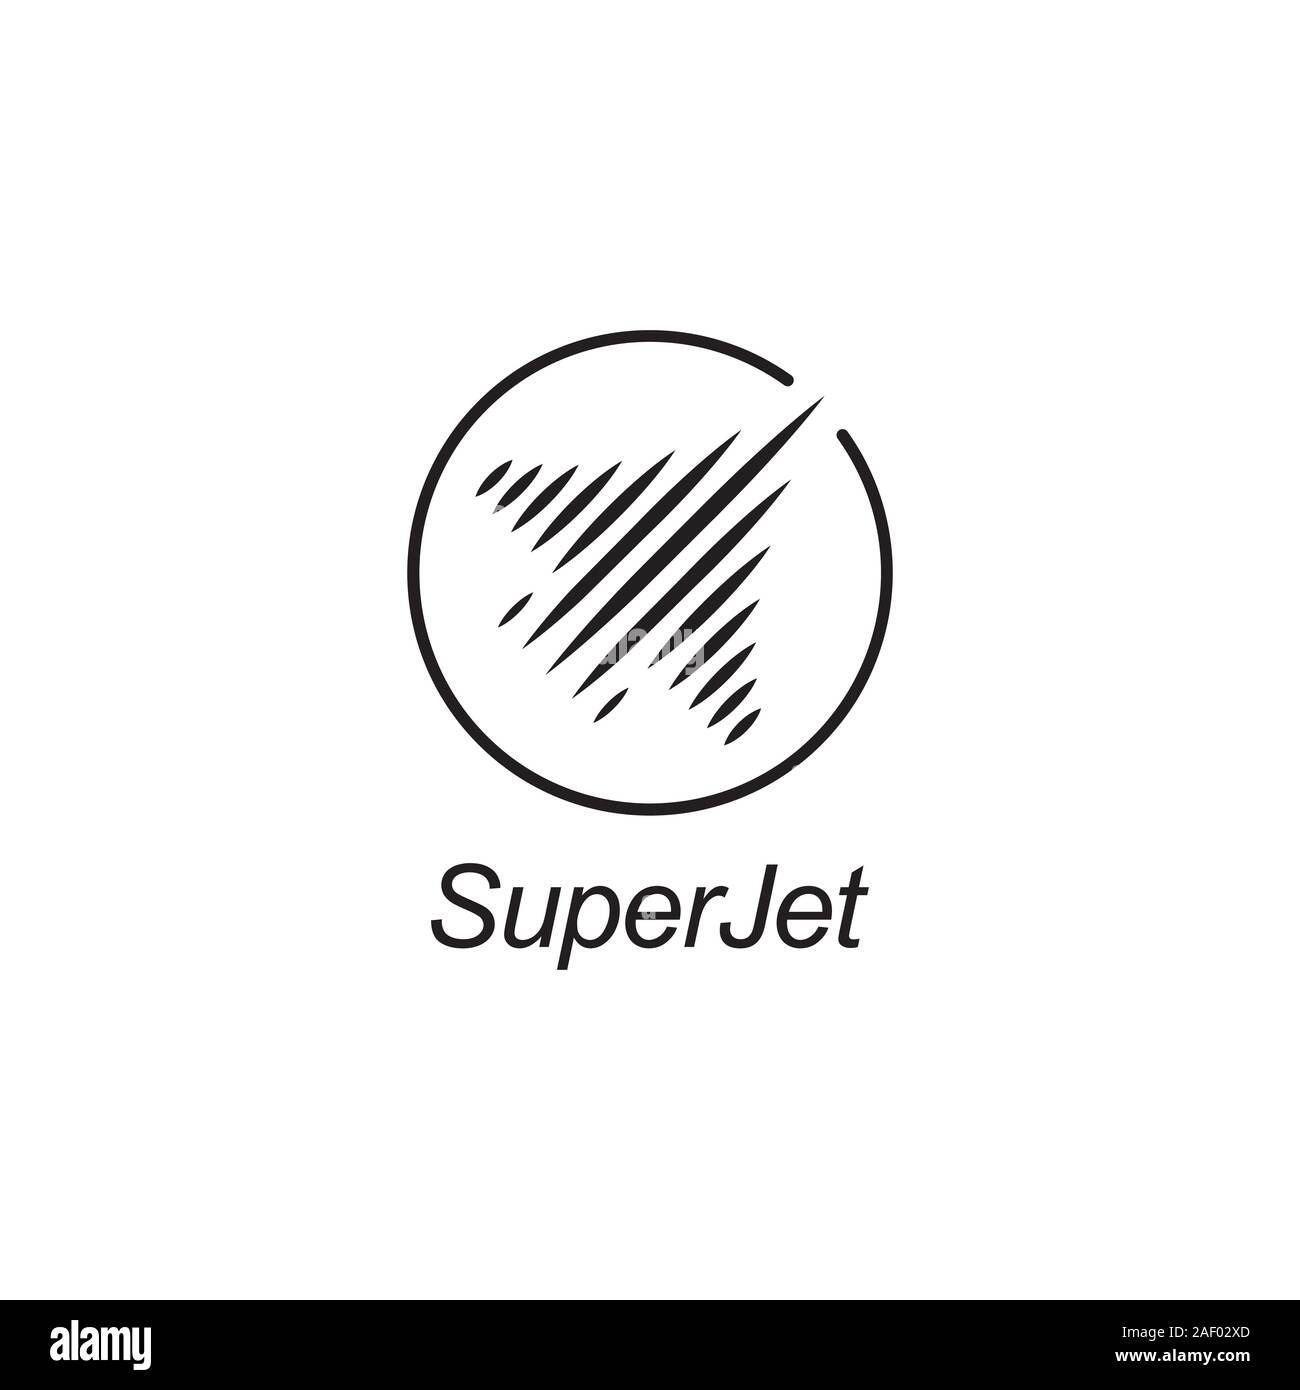 Jet symbol logo design vector template Stock Vector